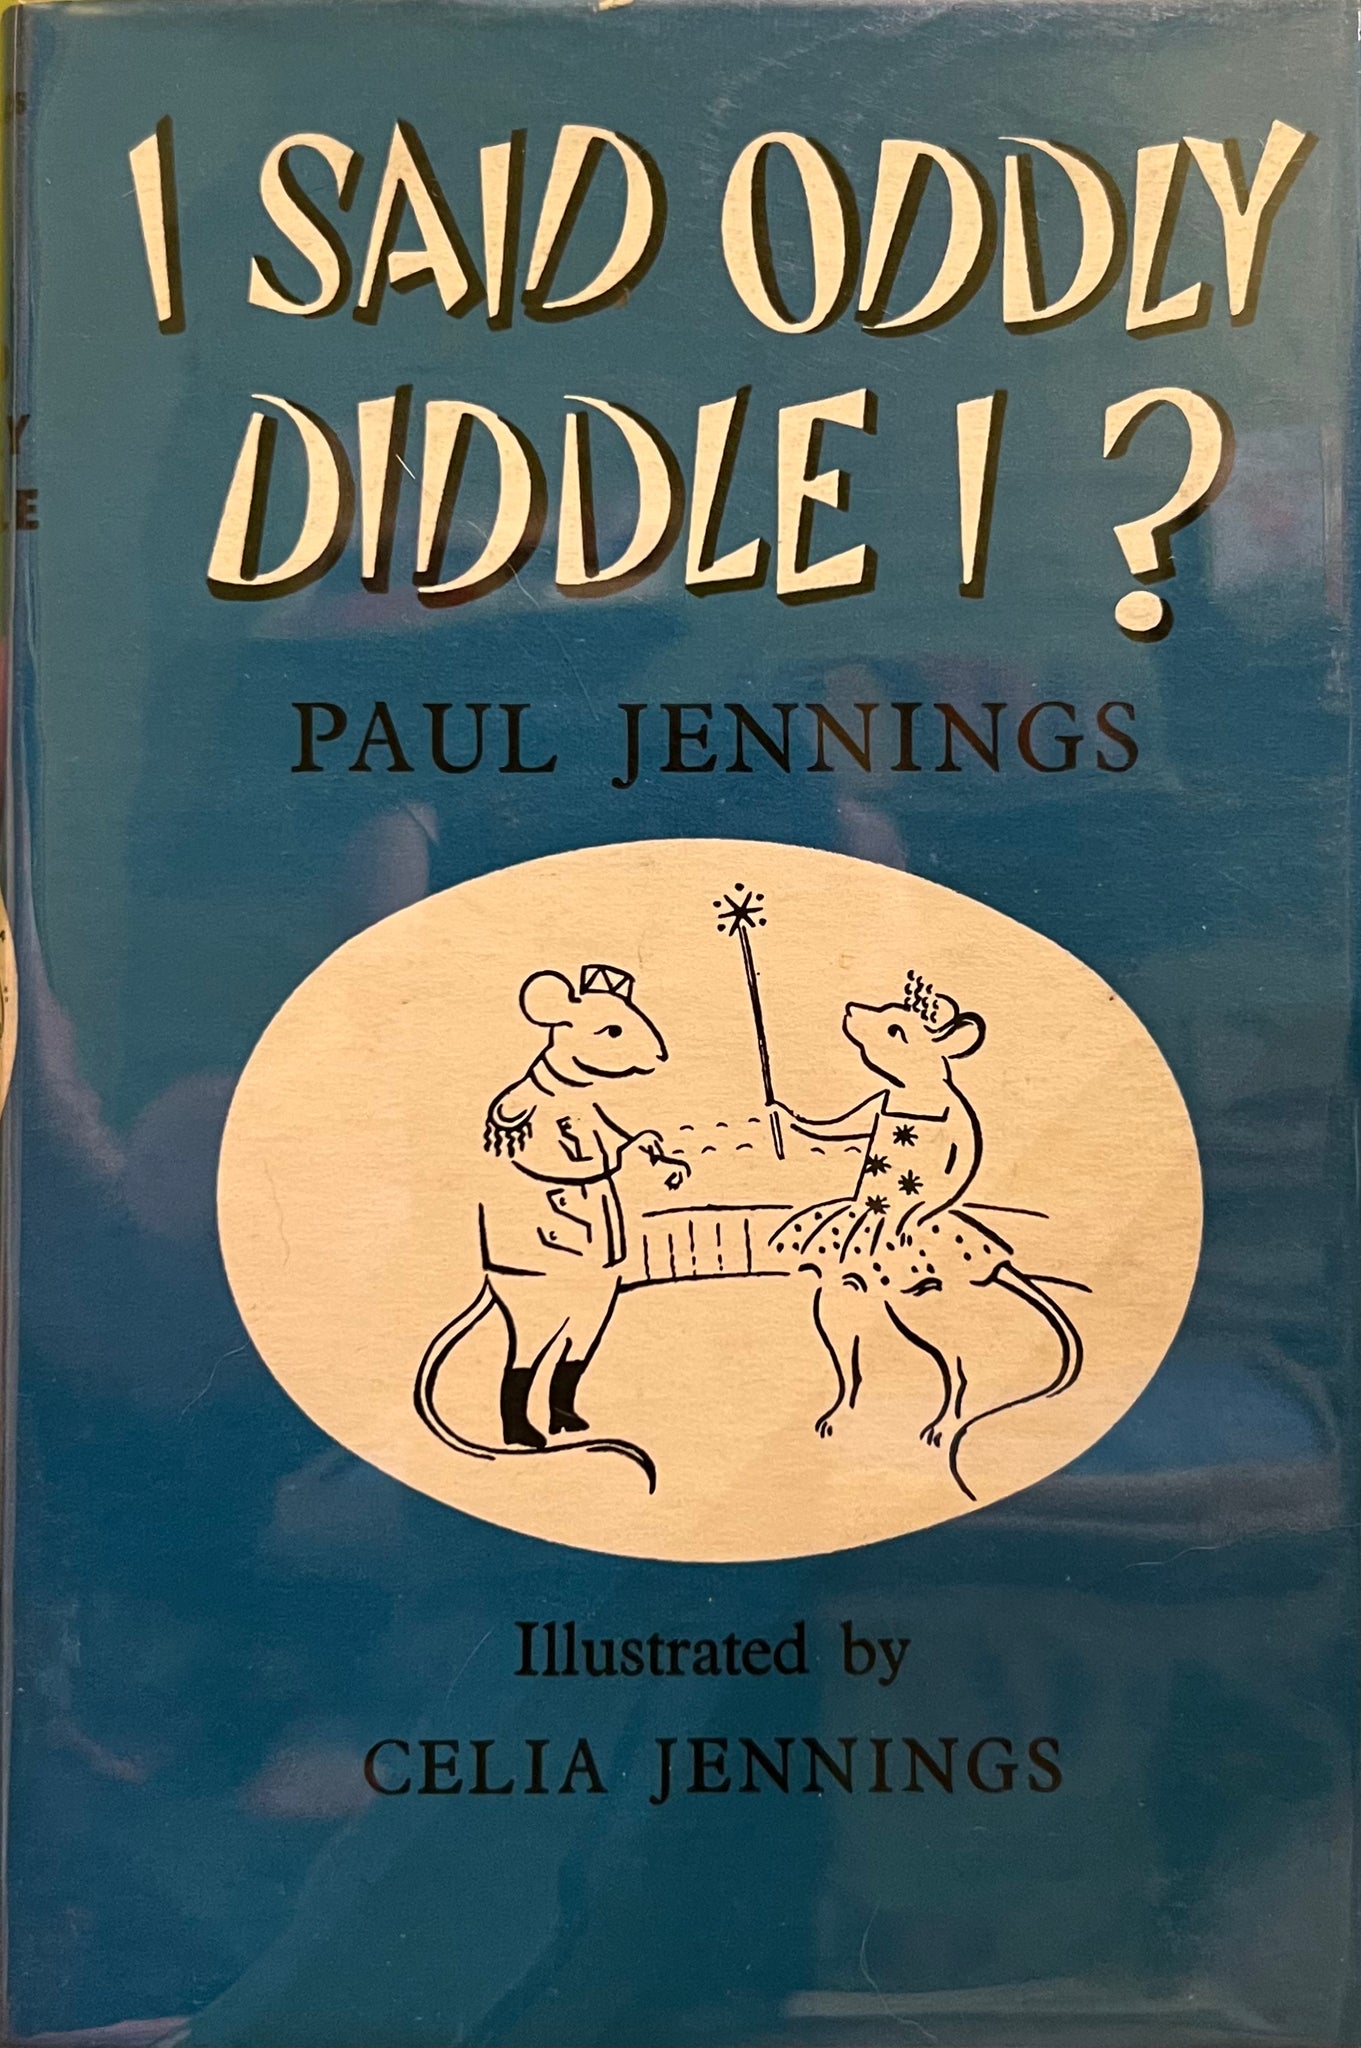 I Said Oddly Diddle I?, Paul Jennings